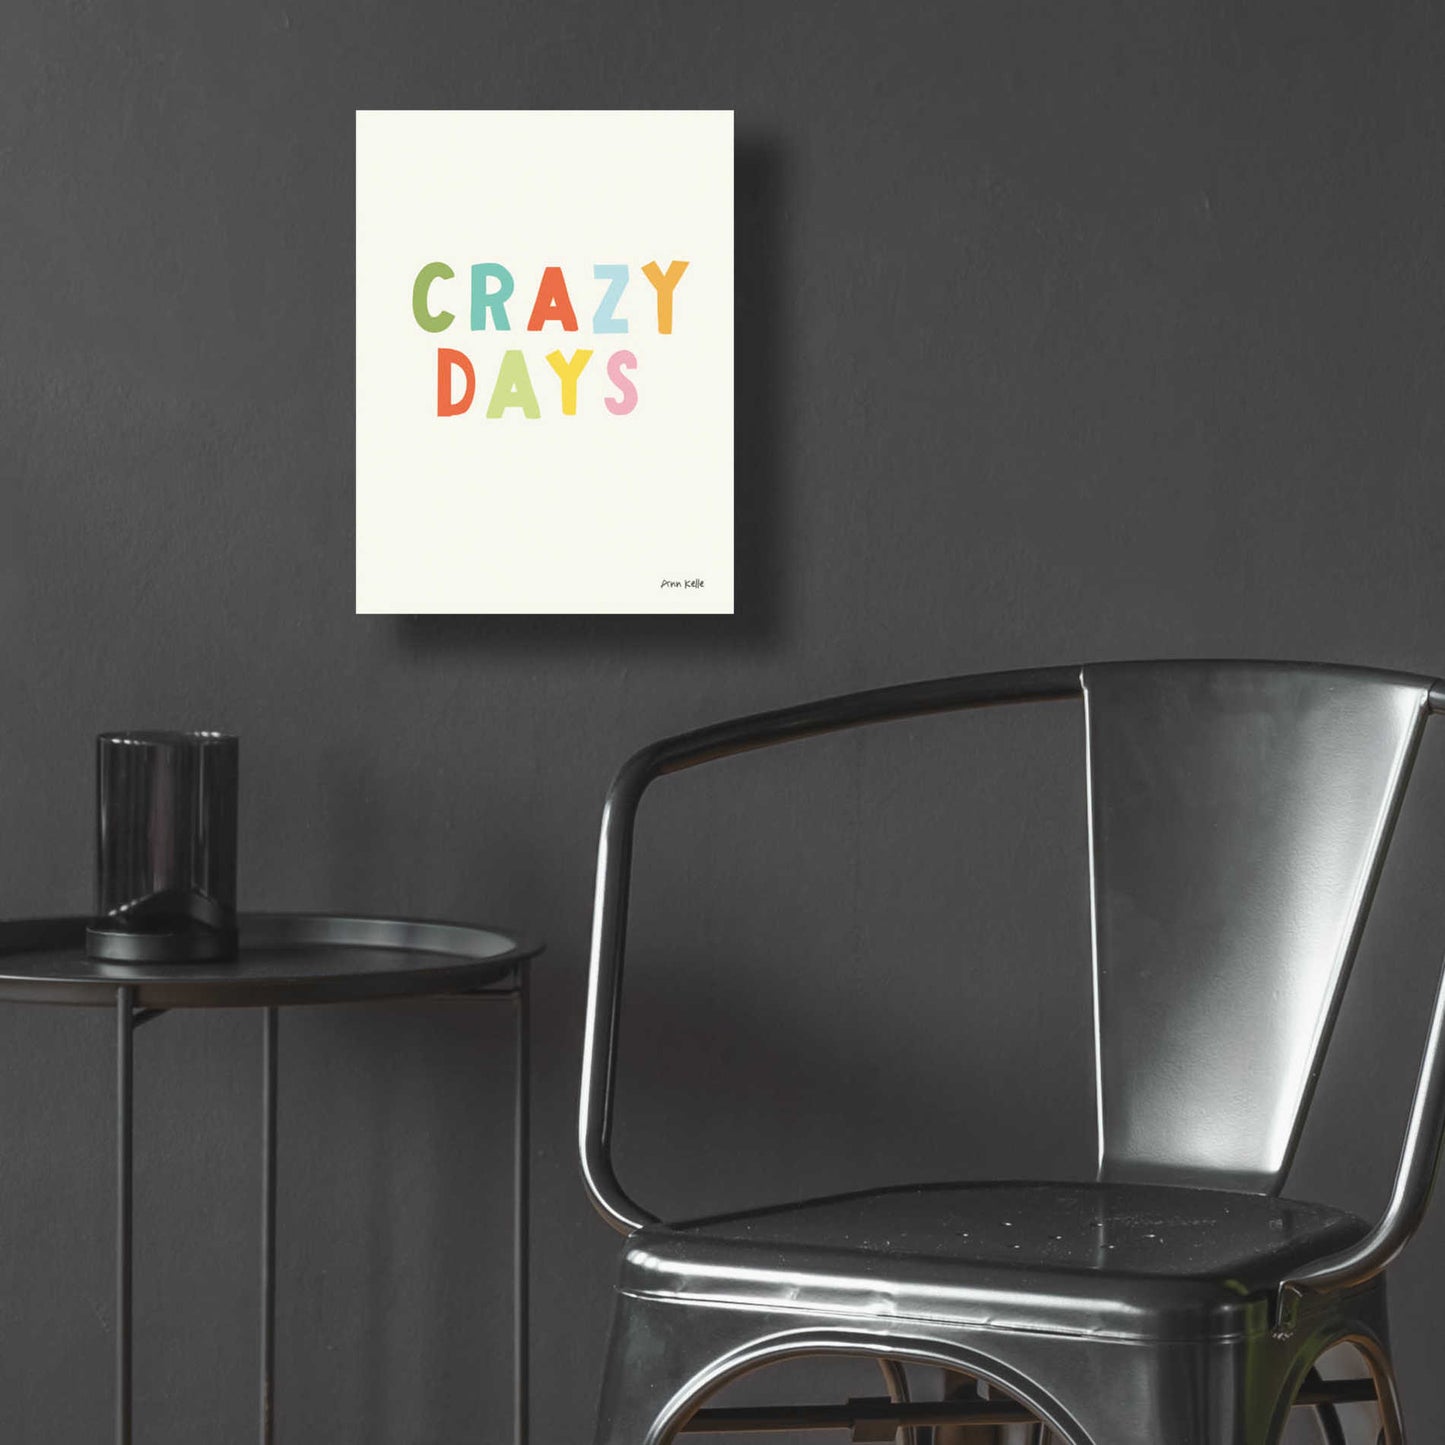 Epic Art 'Crazy Days' by Ann Kelle Designs, Acrylic Glass Wall Art,12x16